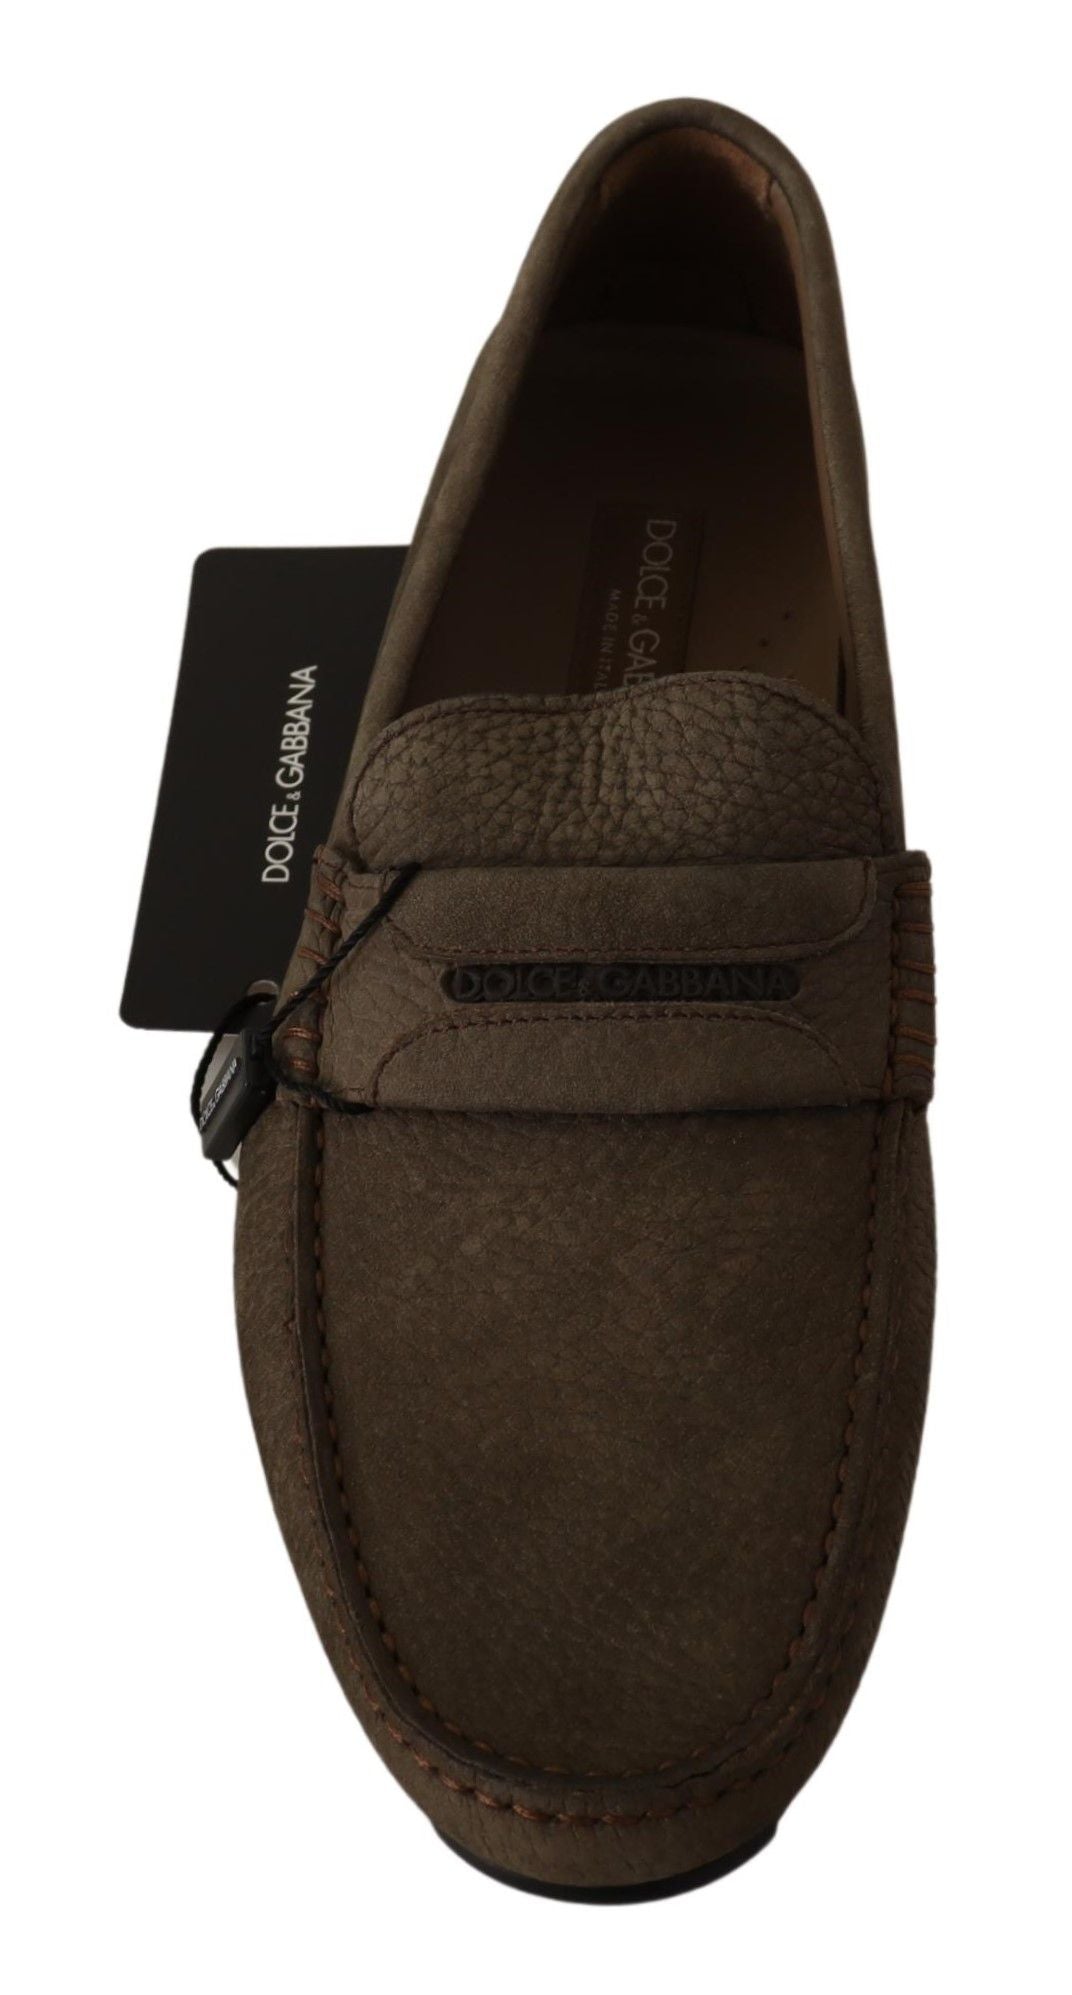 Dolce & Gabbana Brown in pelle marrone Slip su scarpe Mocassin